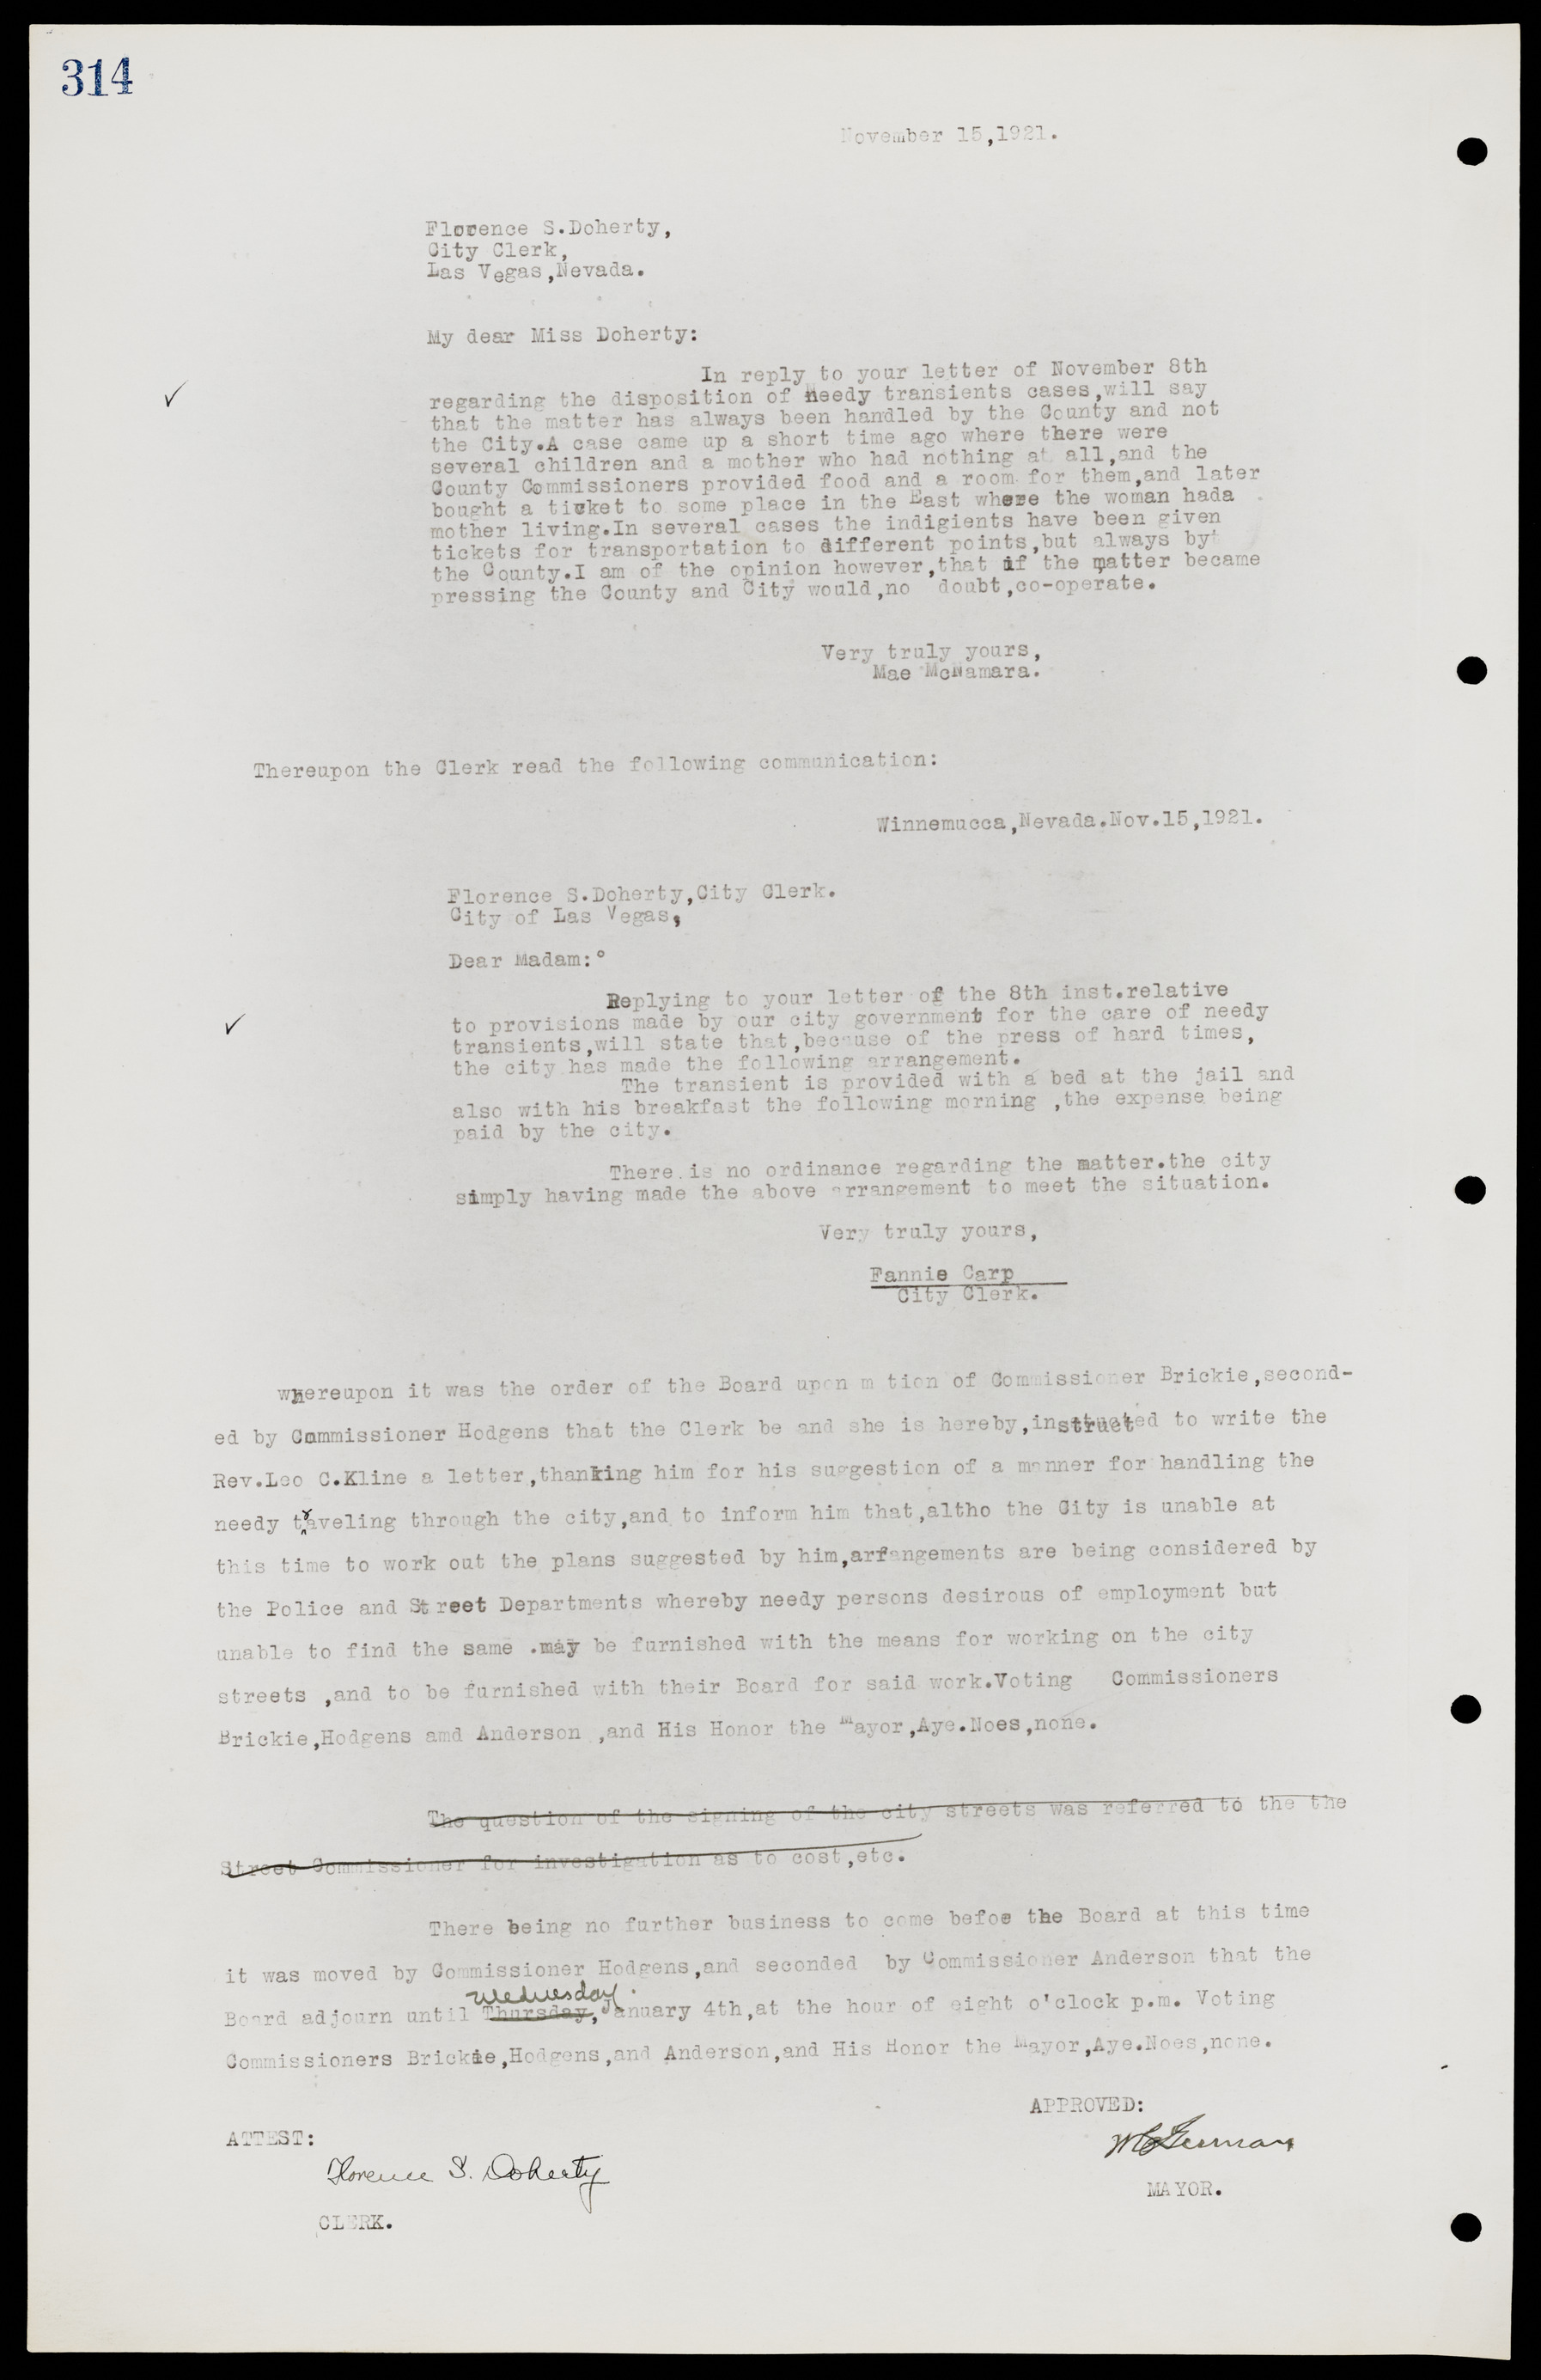 Las Vegas City Commission Minutes, June 22, 1911 to February 7, 1922, lvc000001-330